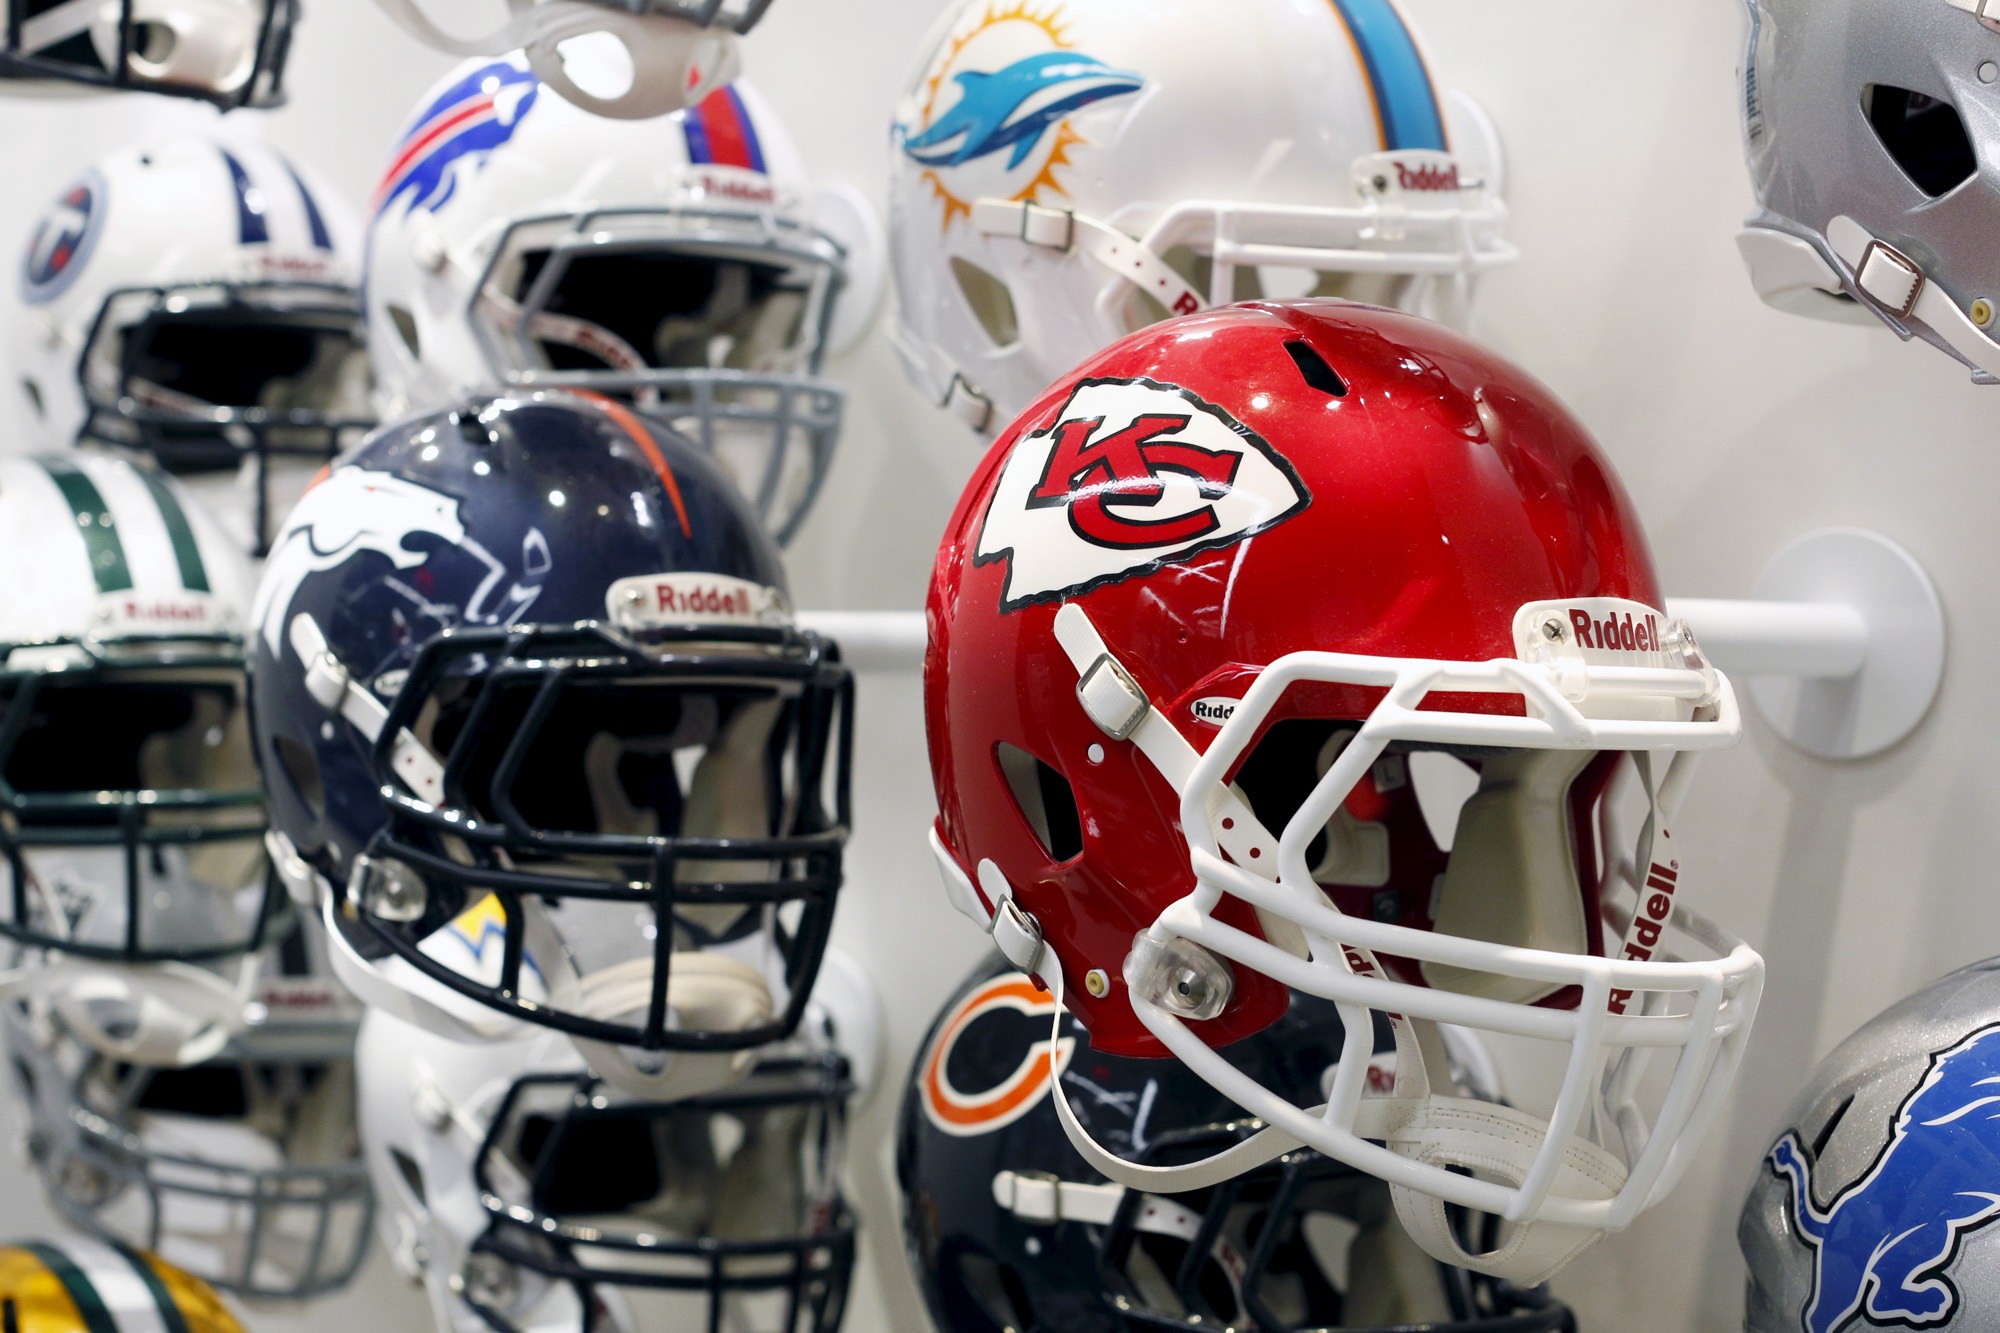 Team helmets at NFL HQ in NYC Dec. 3, 2015. REUTERS/Brendan McDermid